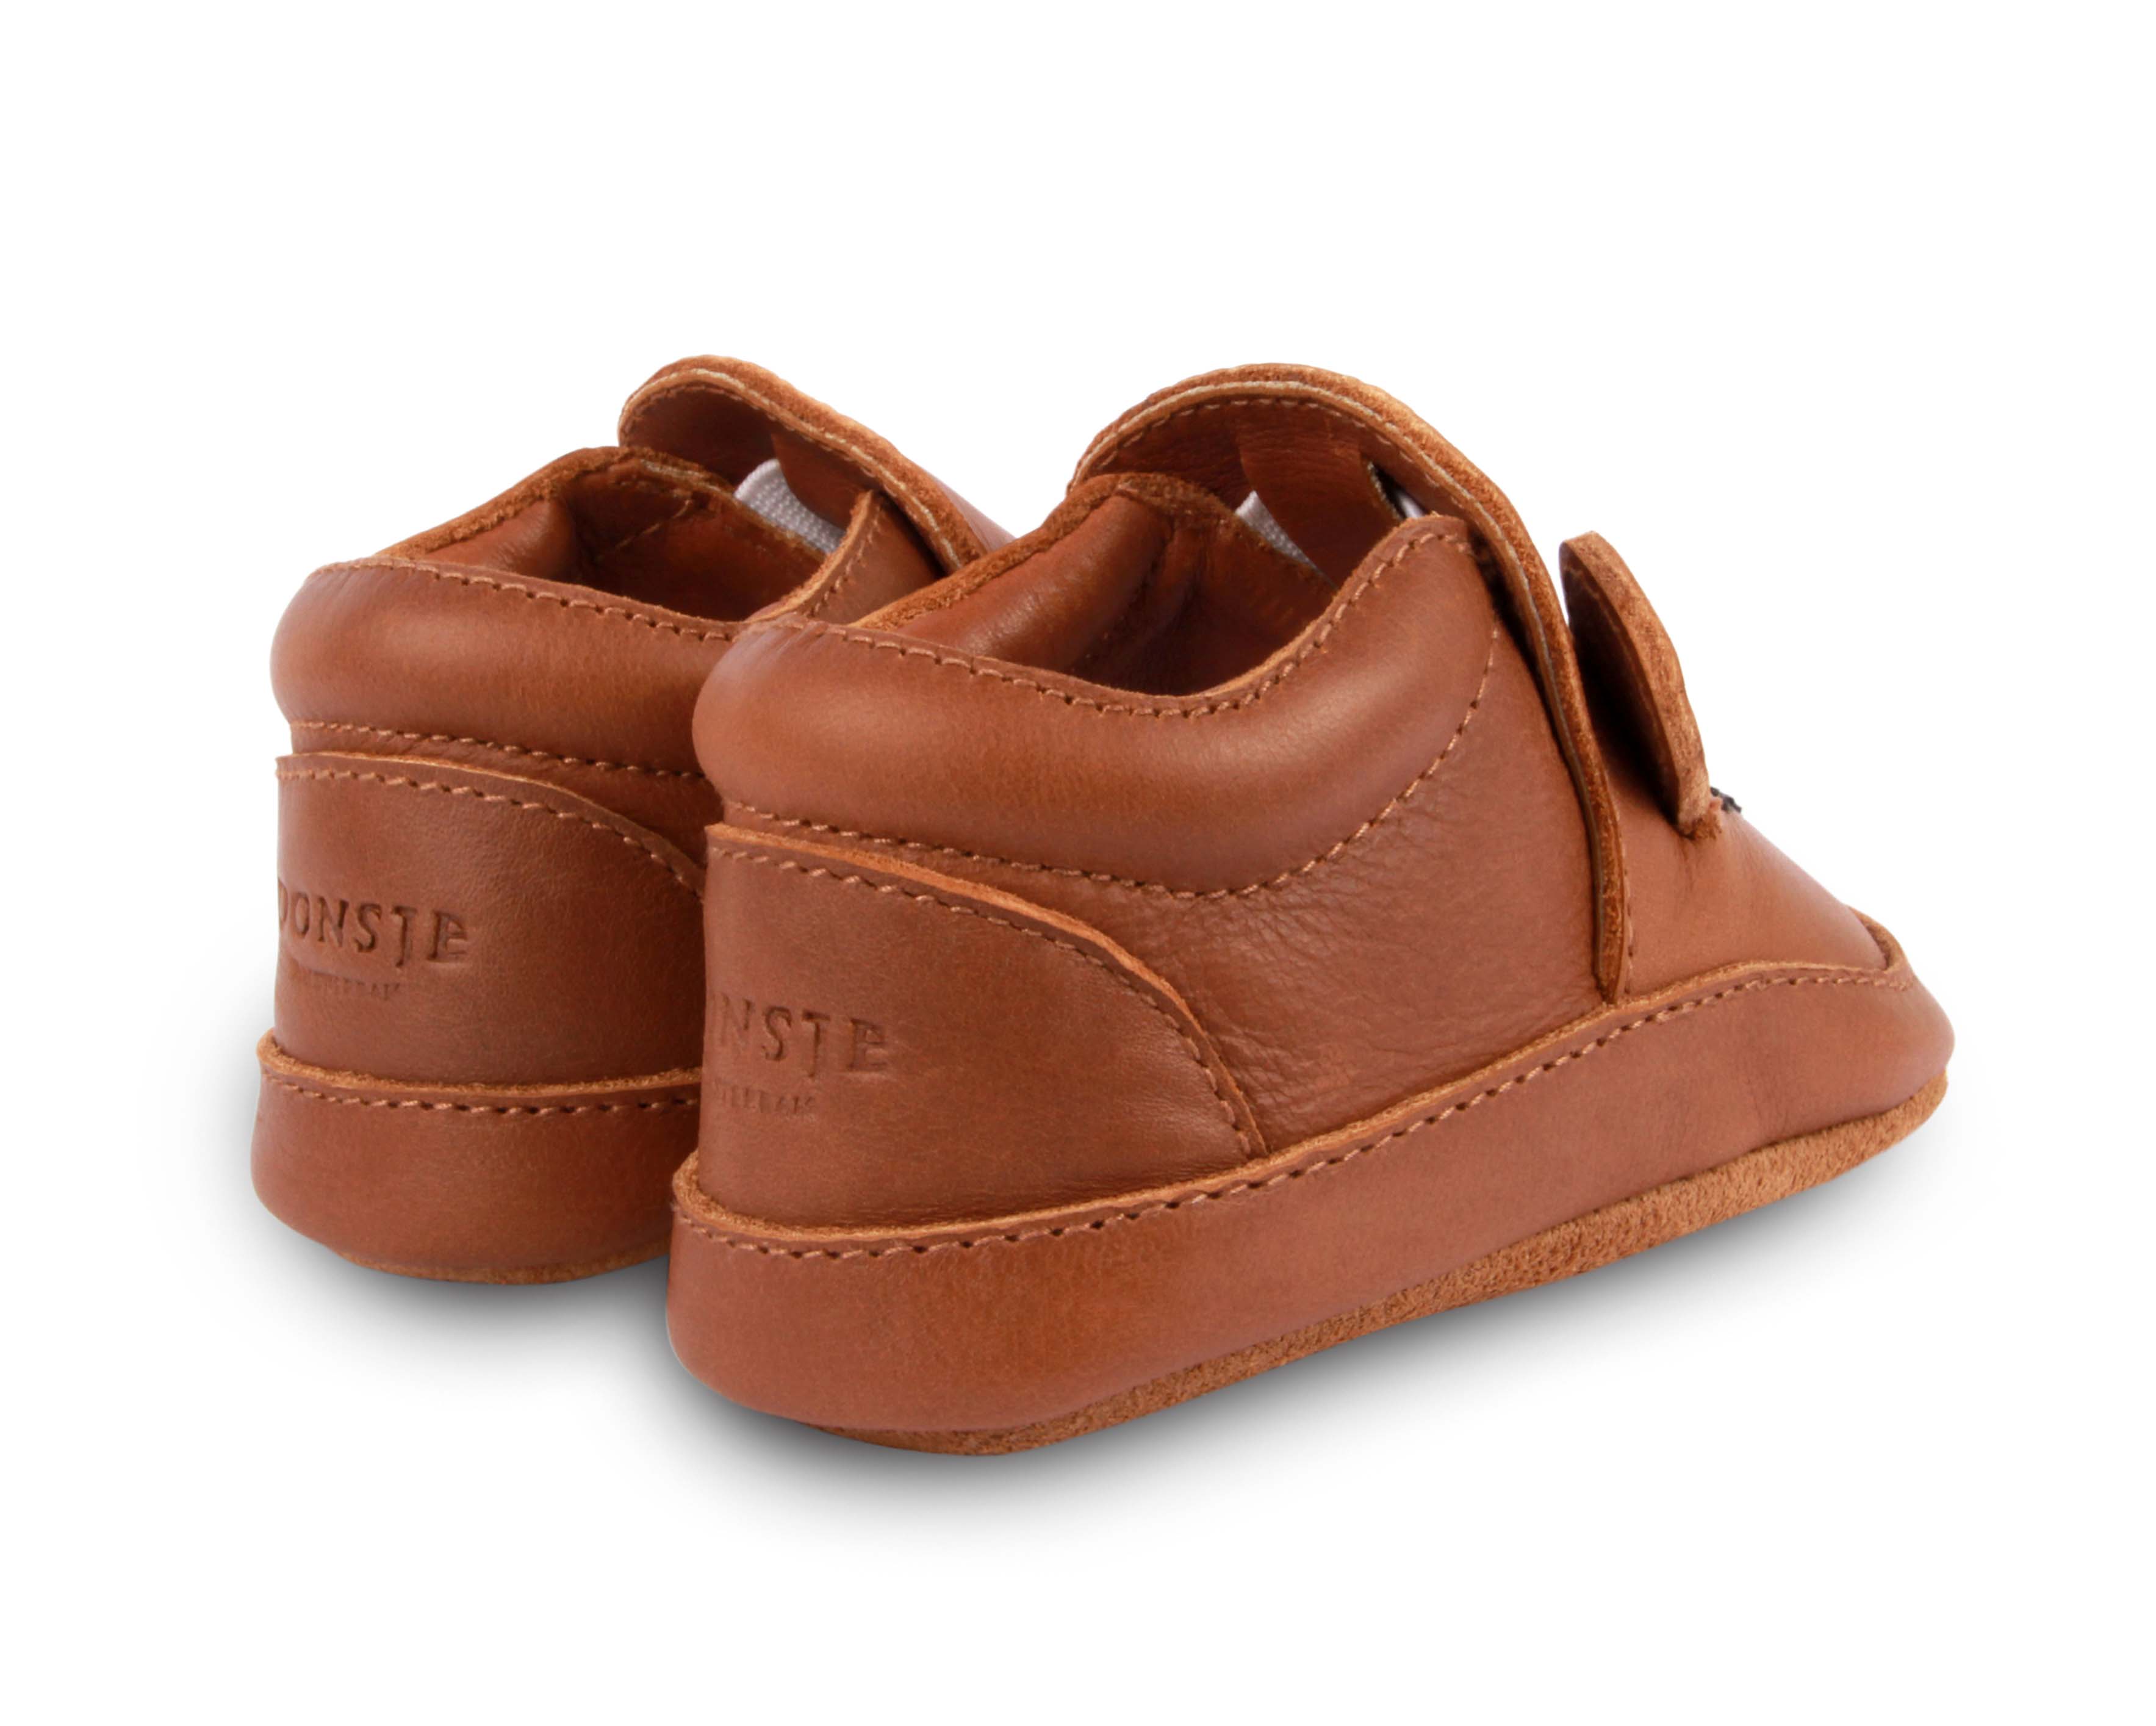 Donsje baby shoes arty bear leather cognac classic flexible suede sole